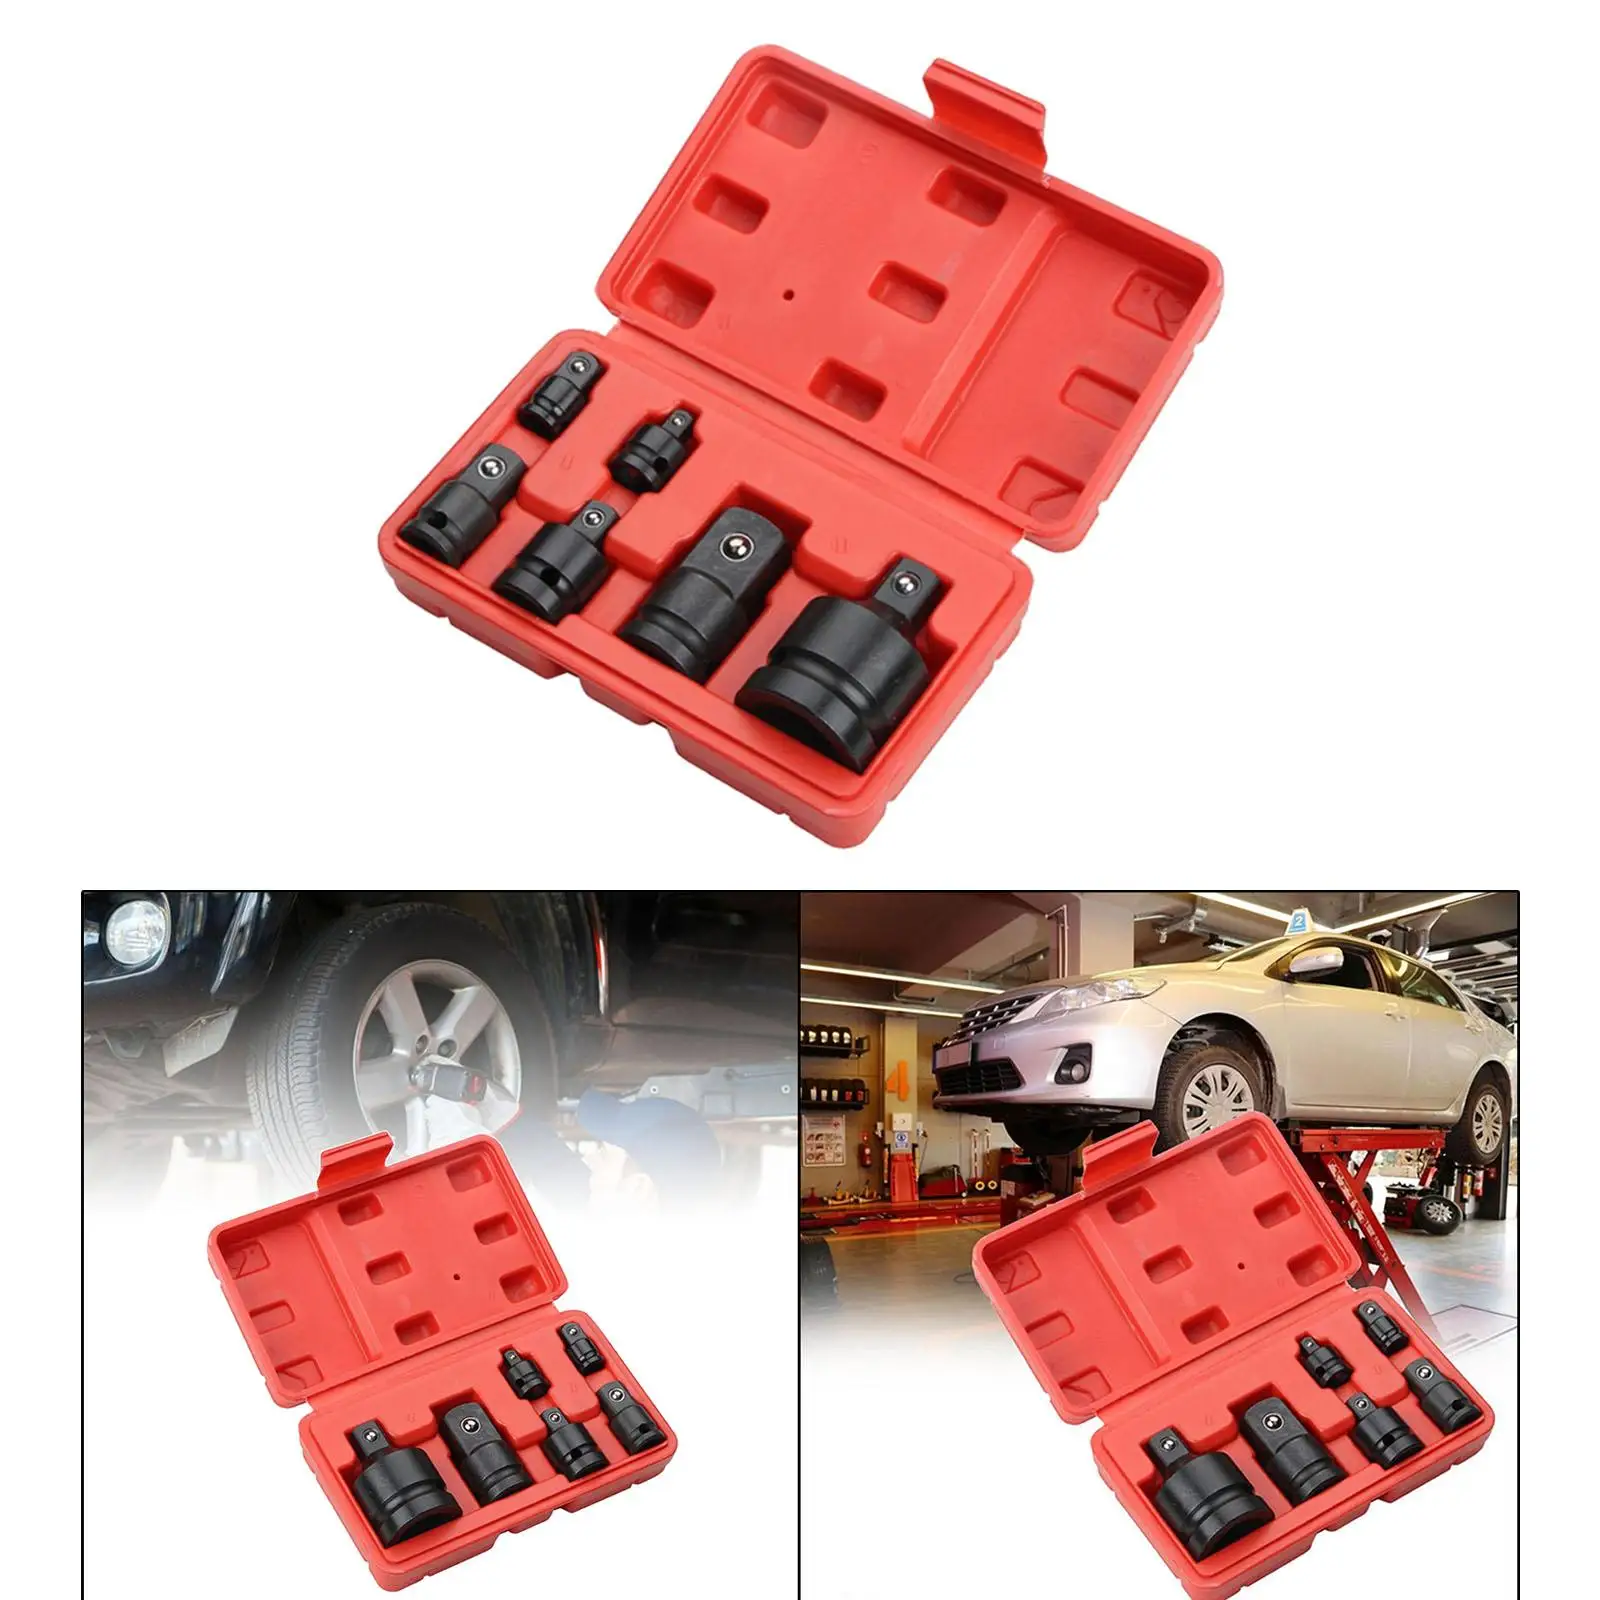 6x 1/2 1/4 3/8 3/4 Ratchet Socket Adapter Impact Driver Conversions Hand Tool Impact Universal Joint Set Auto Repair Parts